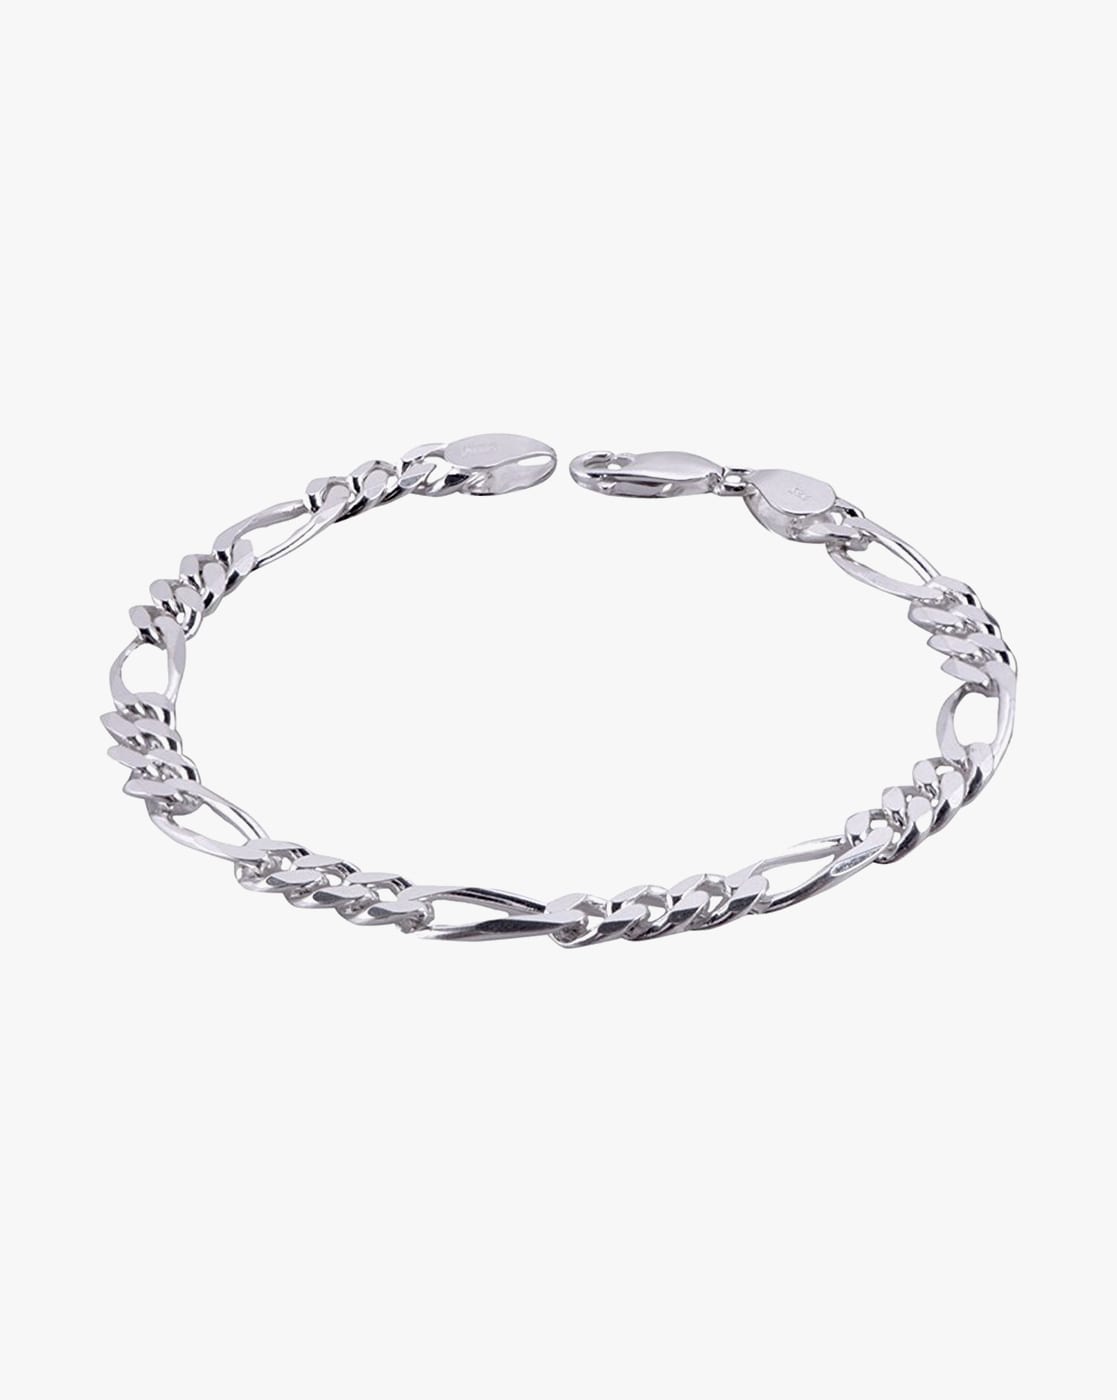 Mens Unusual Sterling Silver Bracelet | LOVE2HAVE in the UK!